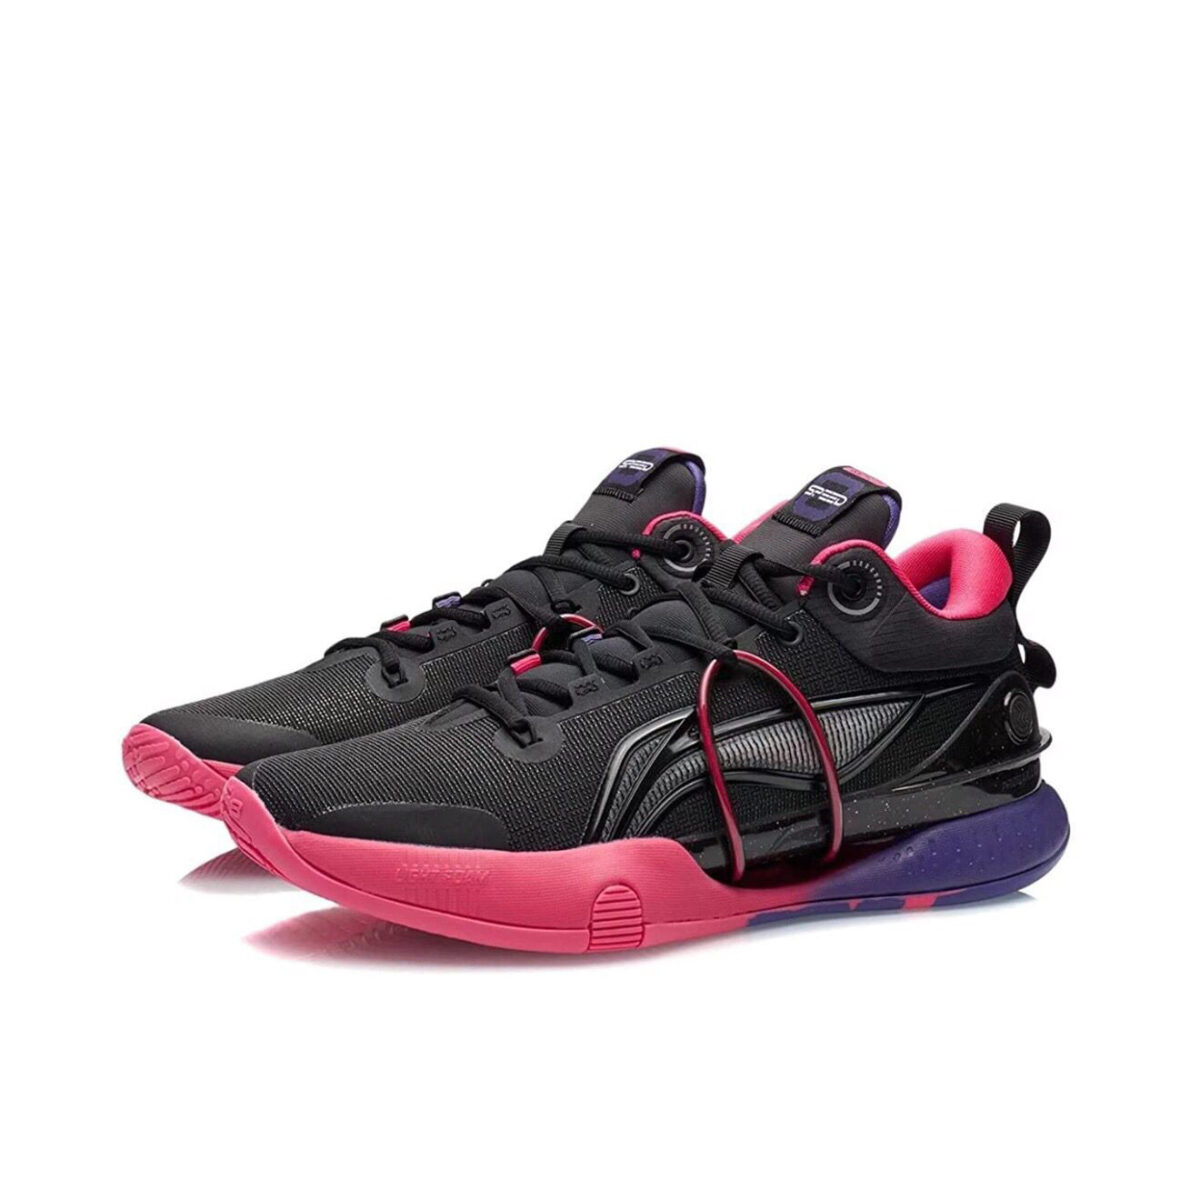 Jimmy Butler x LiNing Speed 8 Premium “Sunset” PE Basketball Shoes ...